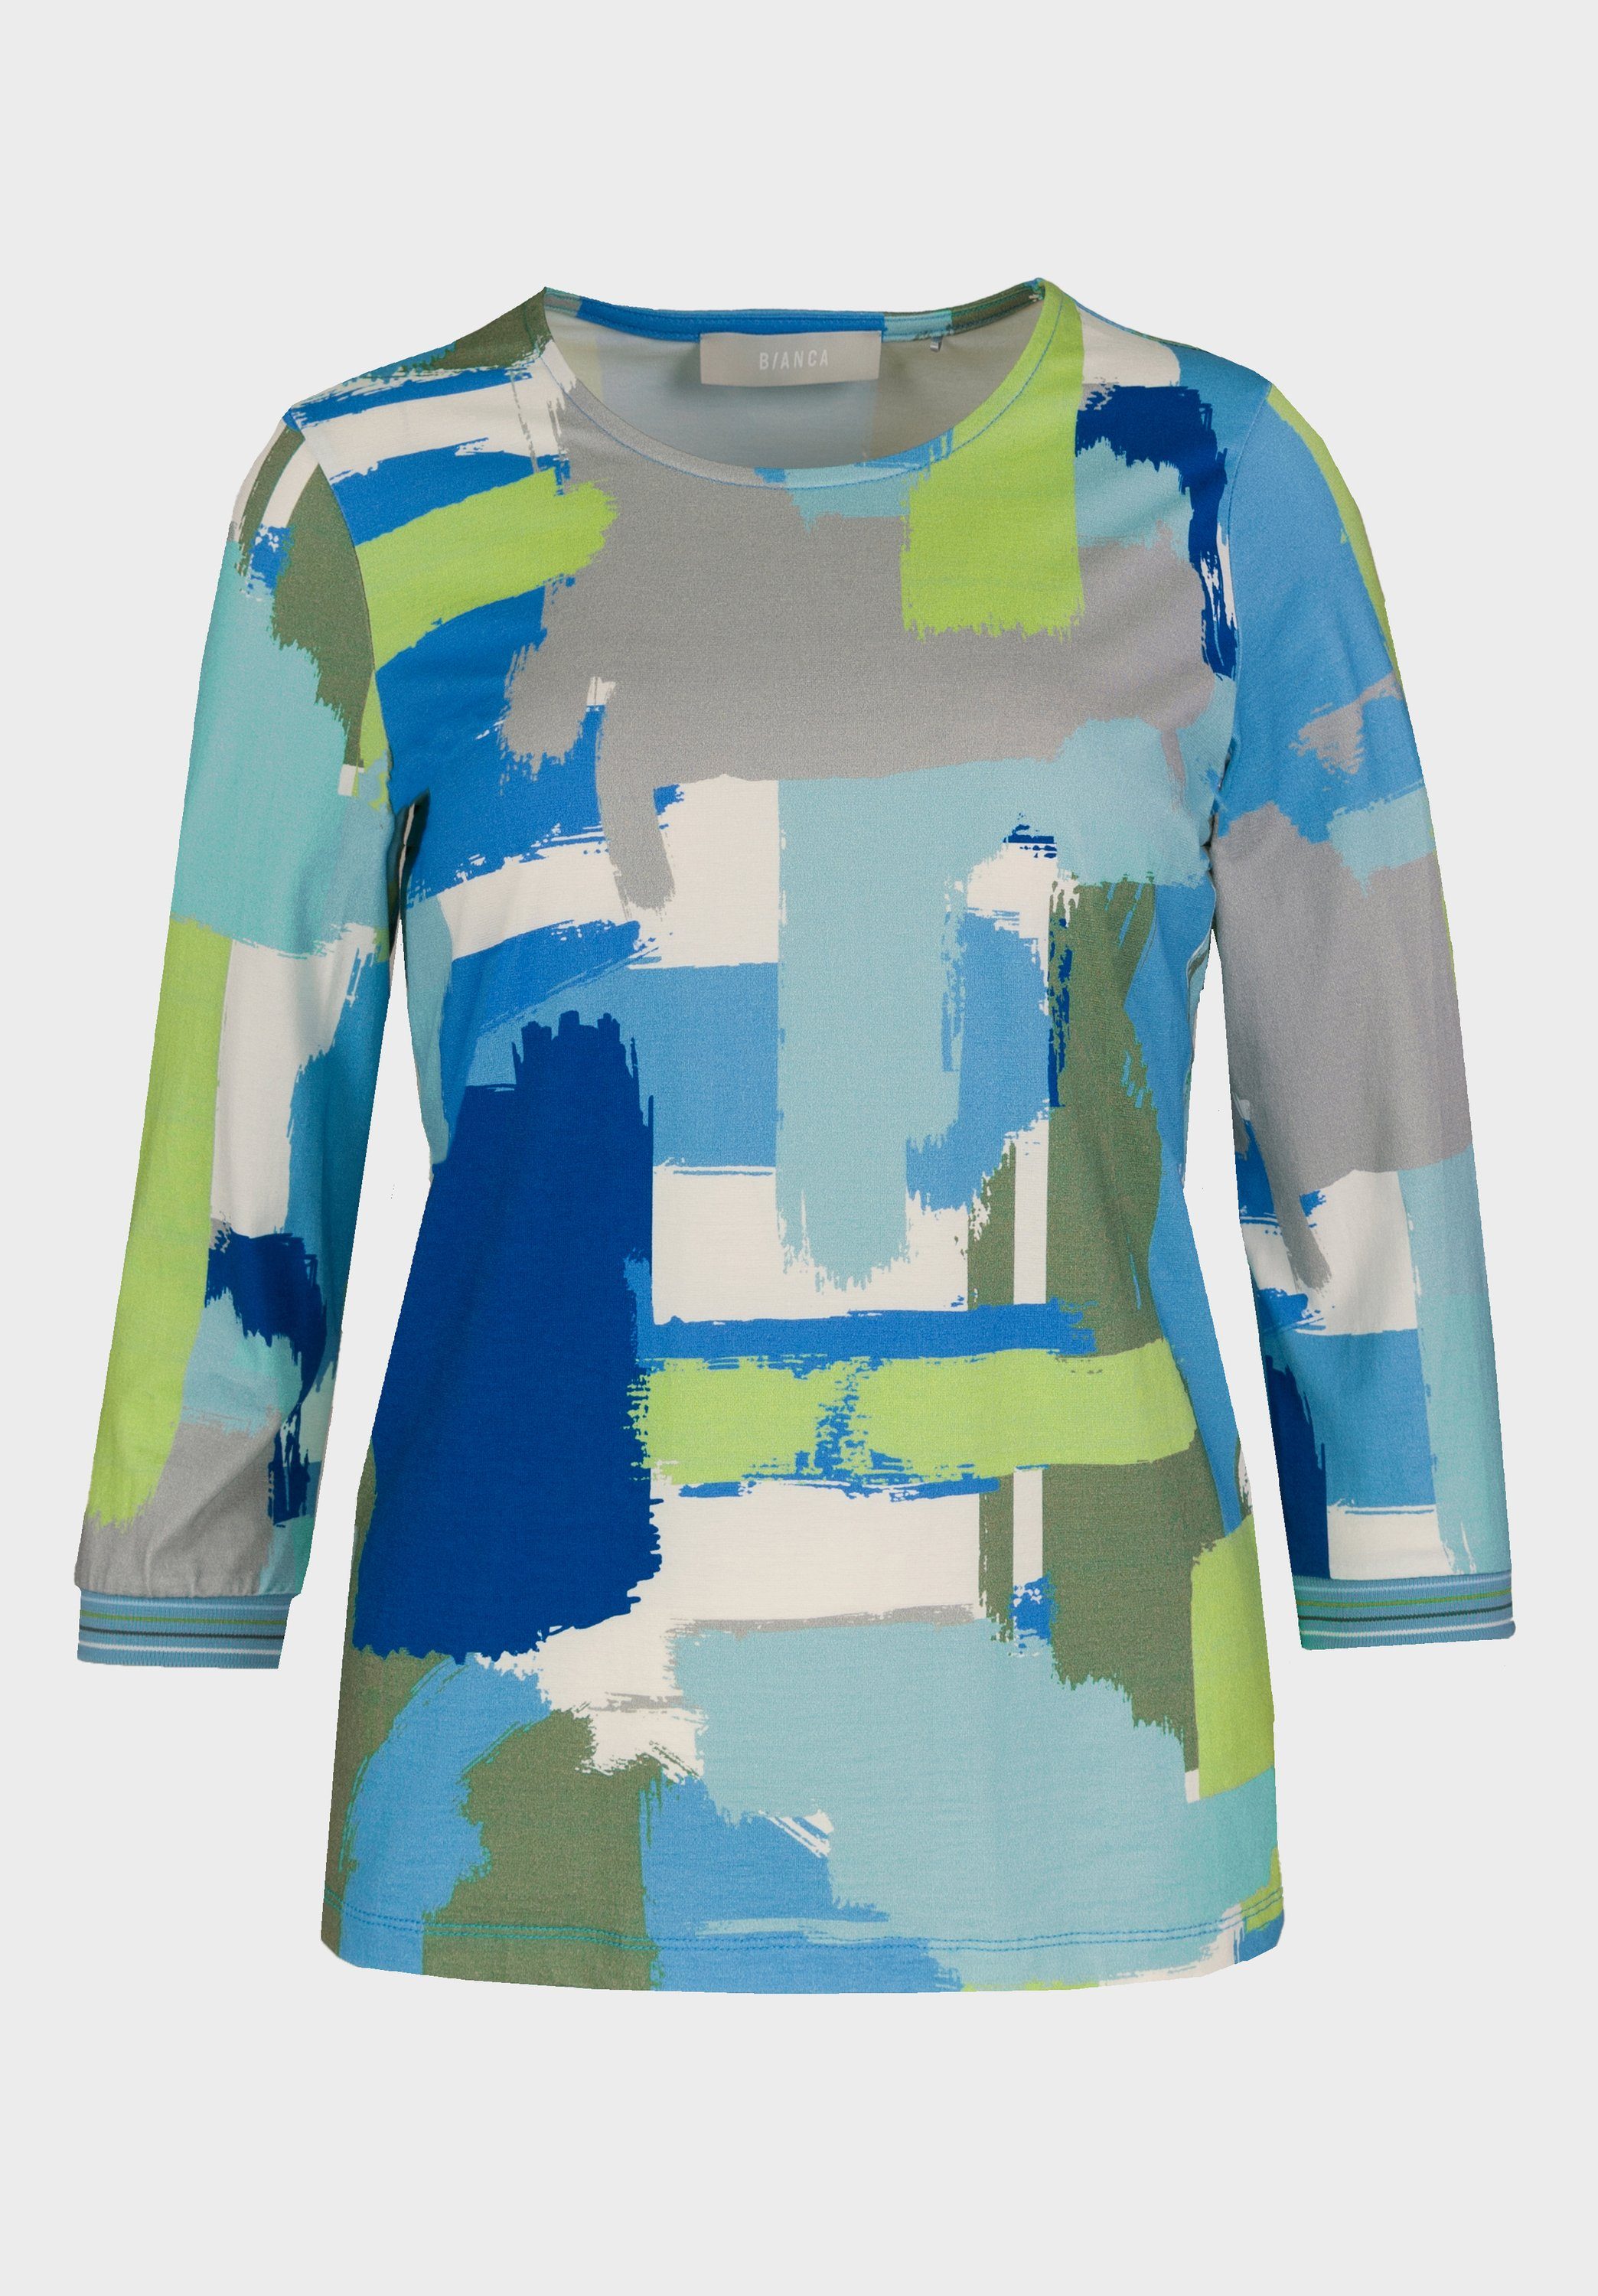 bianca Print-Shirt DINI aus modernem graphischen Muster in Trendfarben